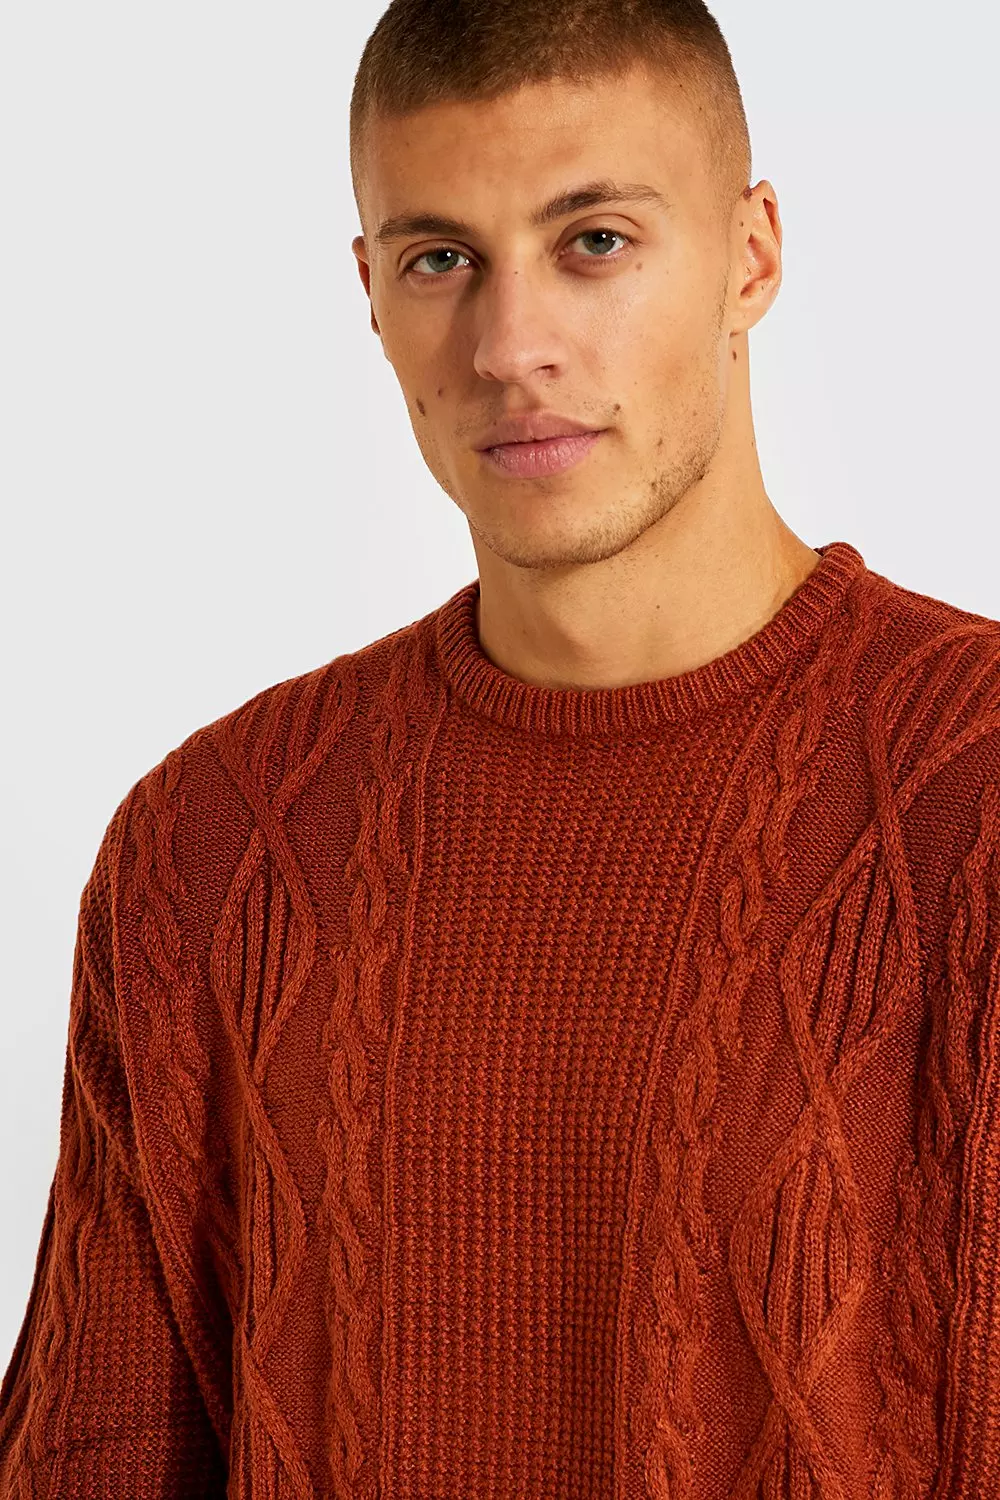 Manfinity EMRG Men Bear Embroidery Drop Shoulder Sweater